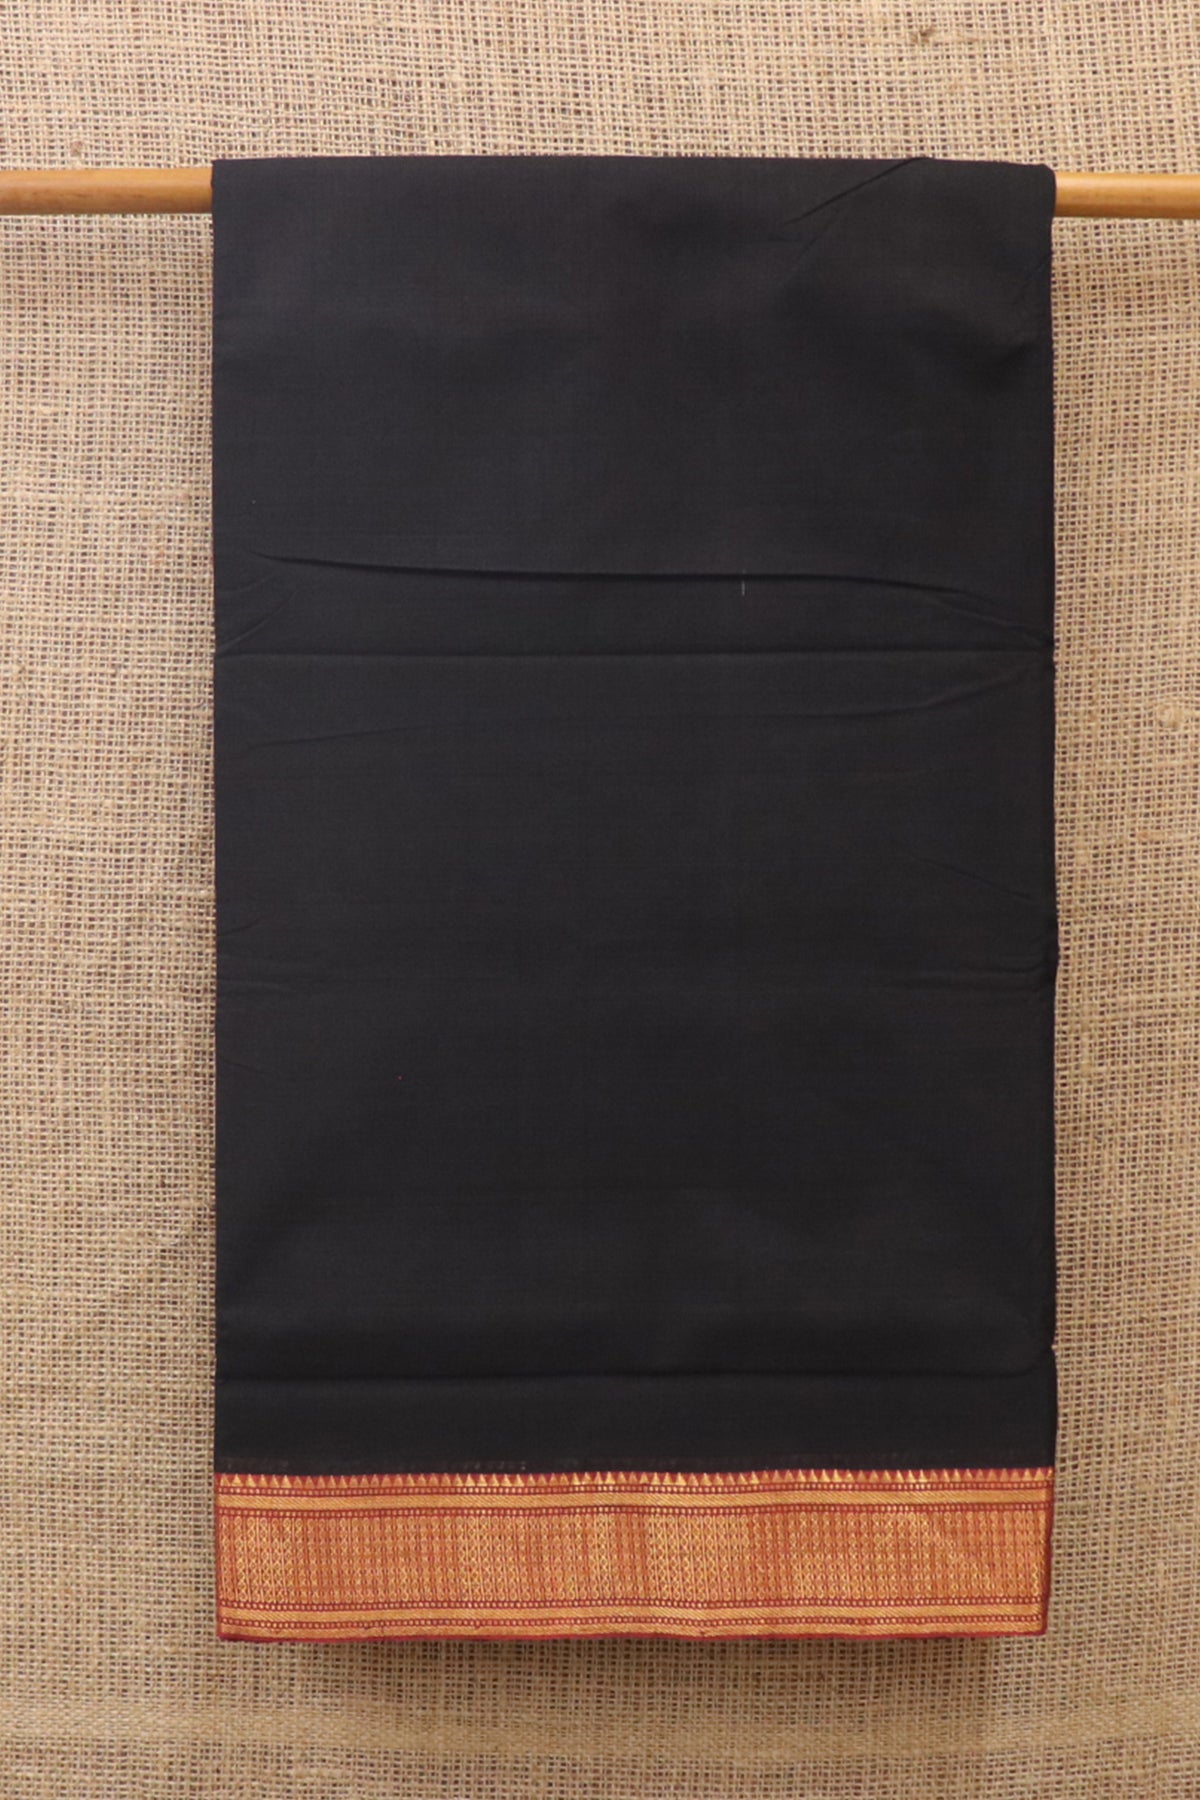 Plain Black With Contrast Zari Border Mangalagiri Cotton Saree